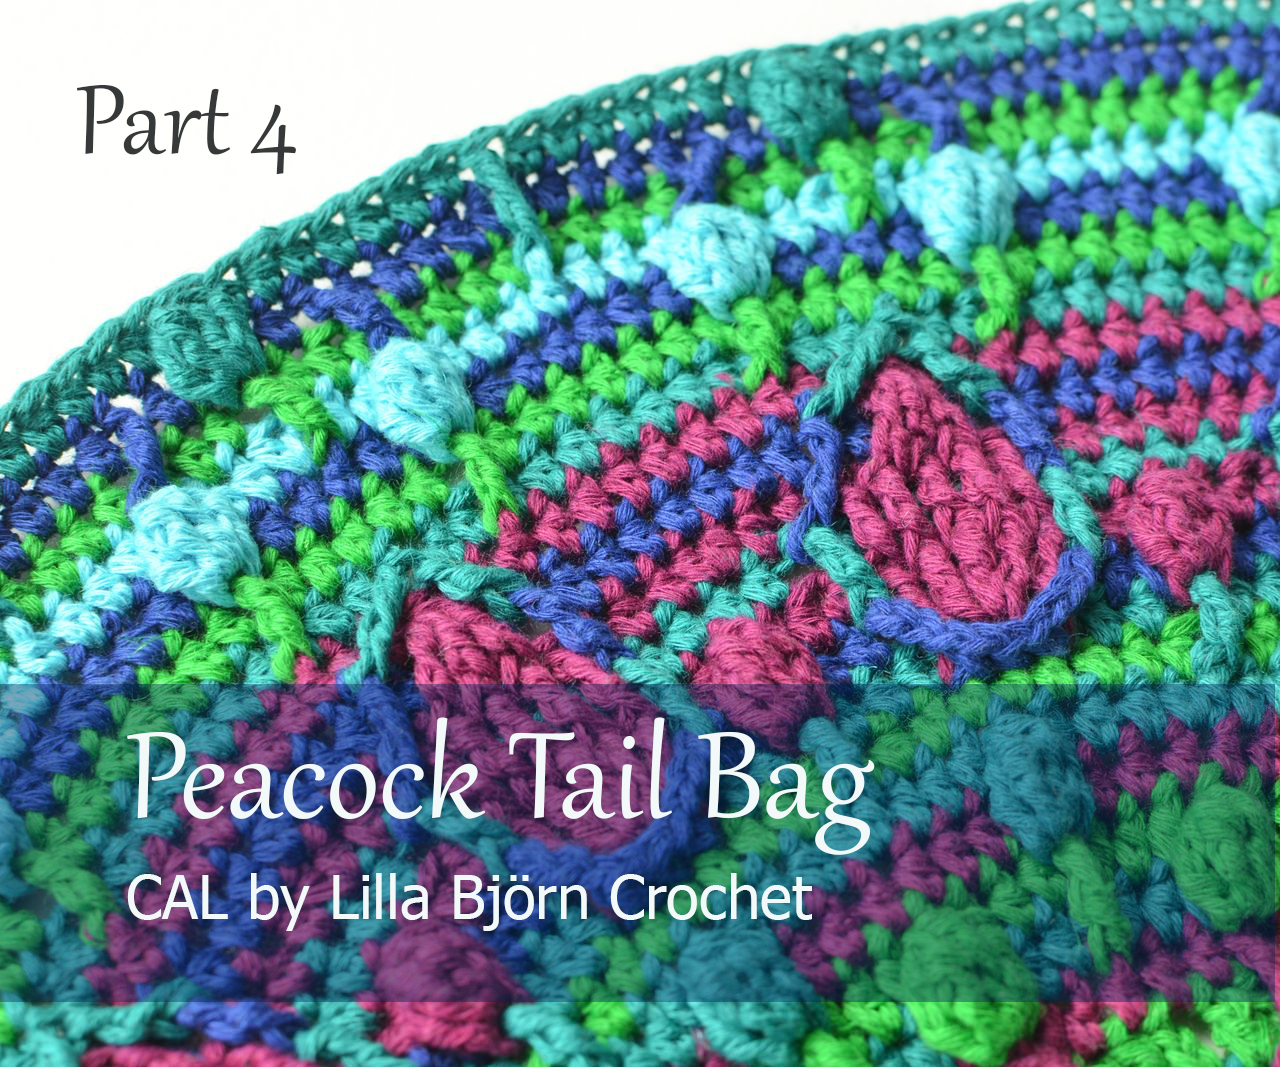 Part 4: Peacock Tail Bag CAL. Original design of a nice colorful bag by Lilla Bjorn Crochet. FREE crochet pattern!